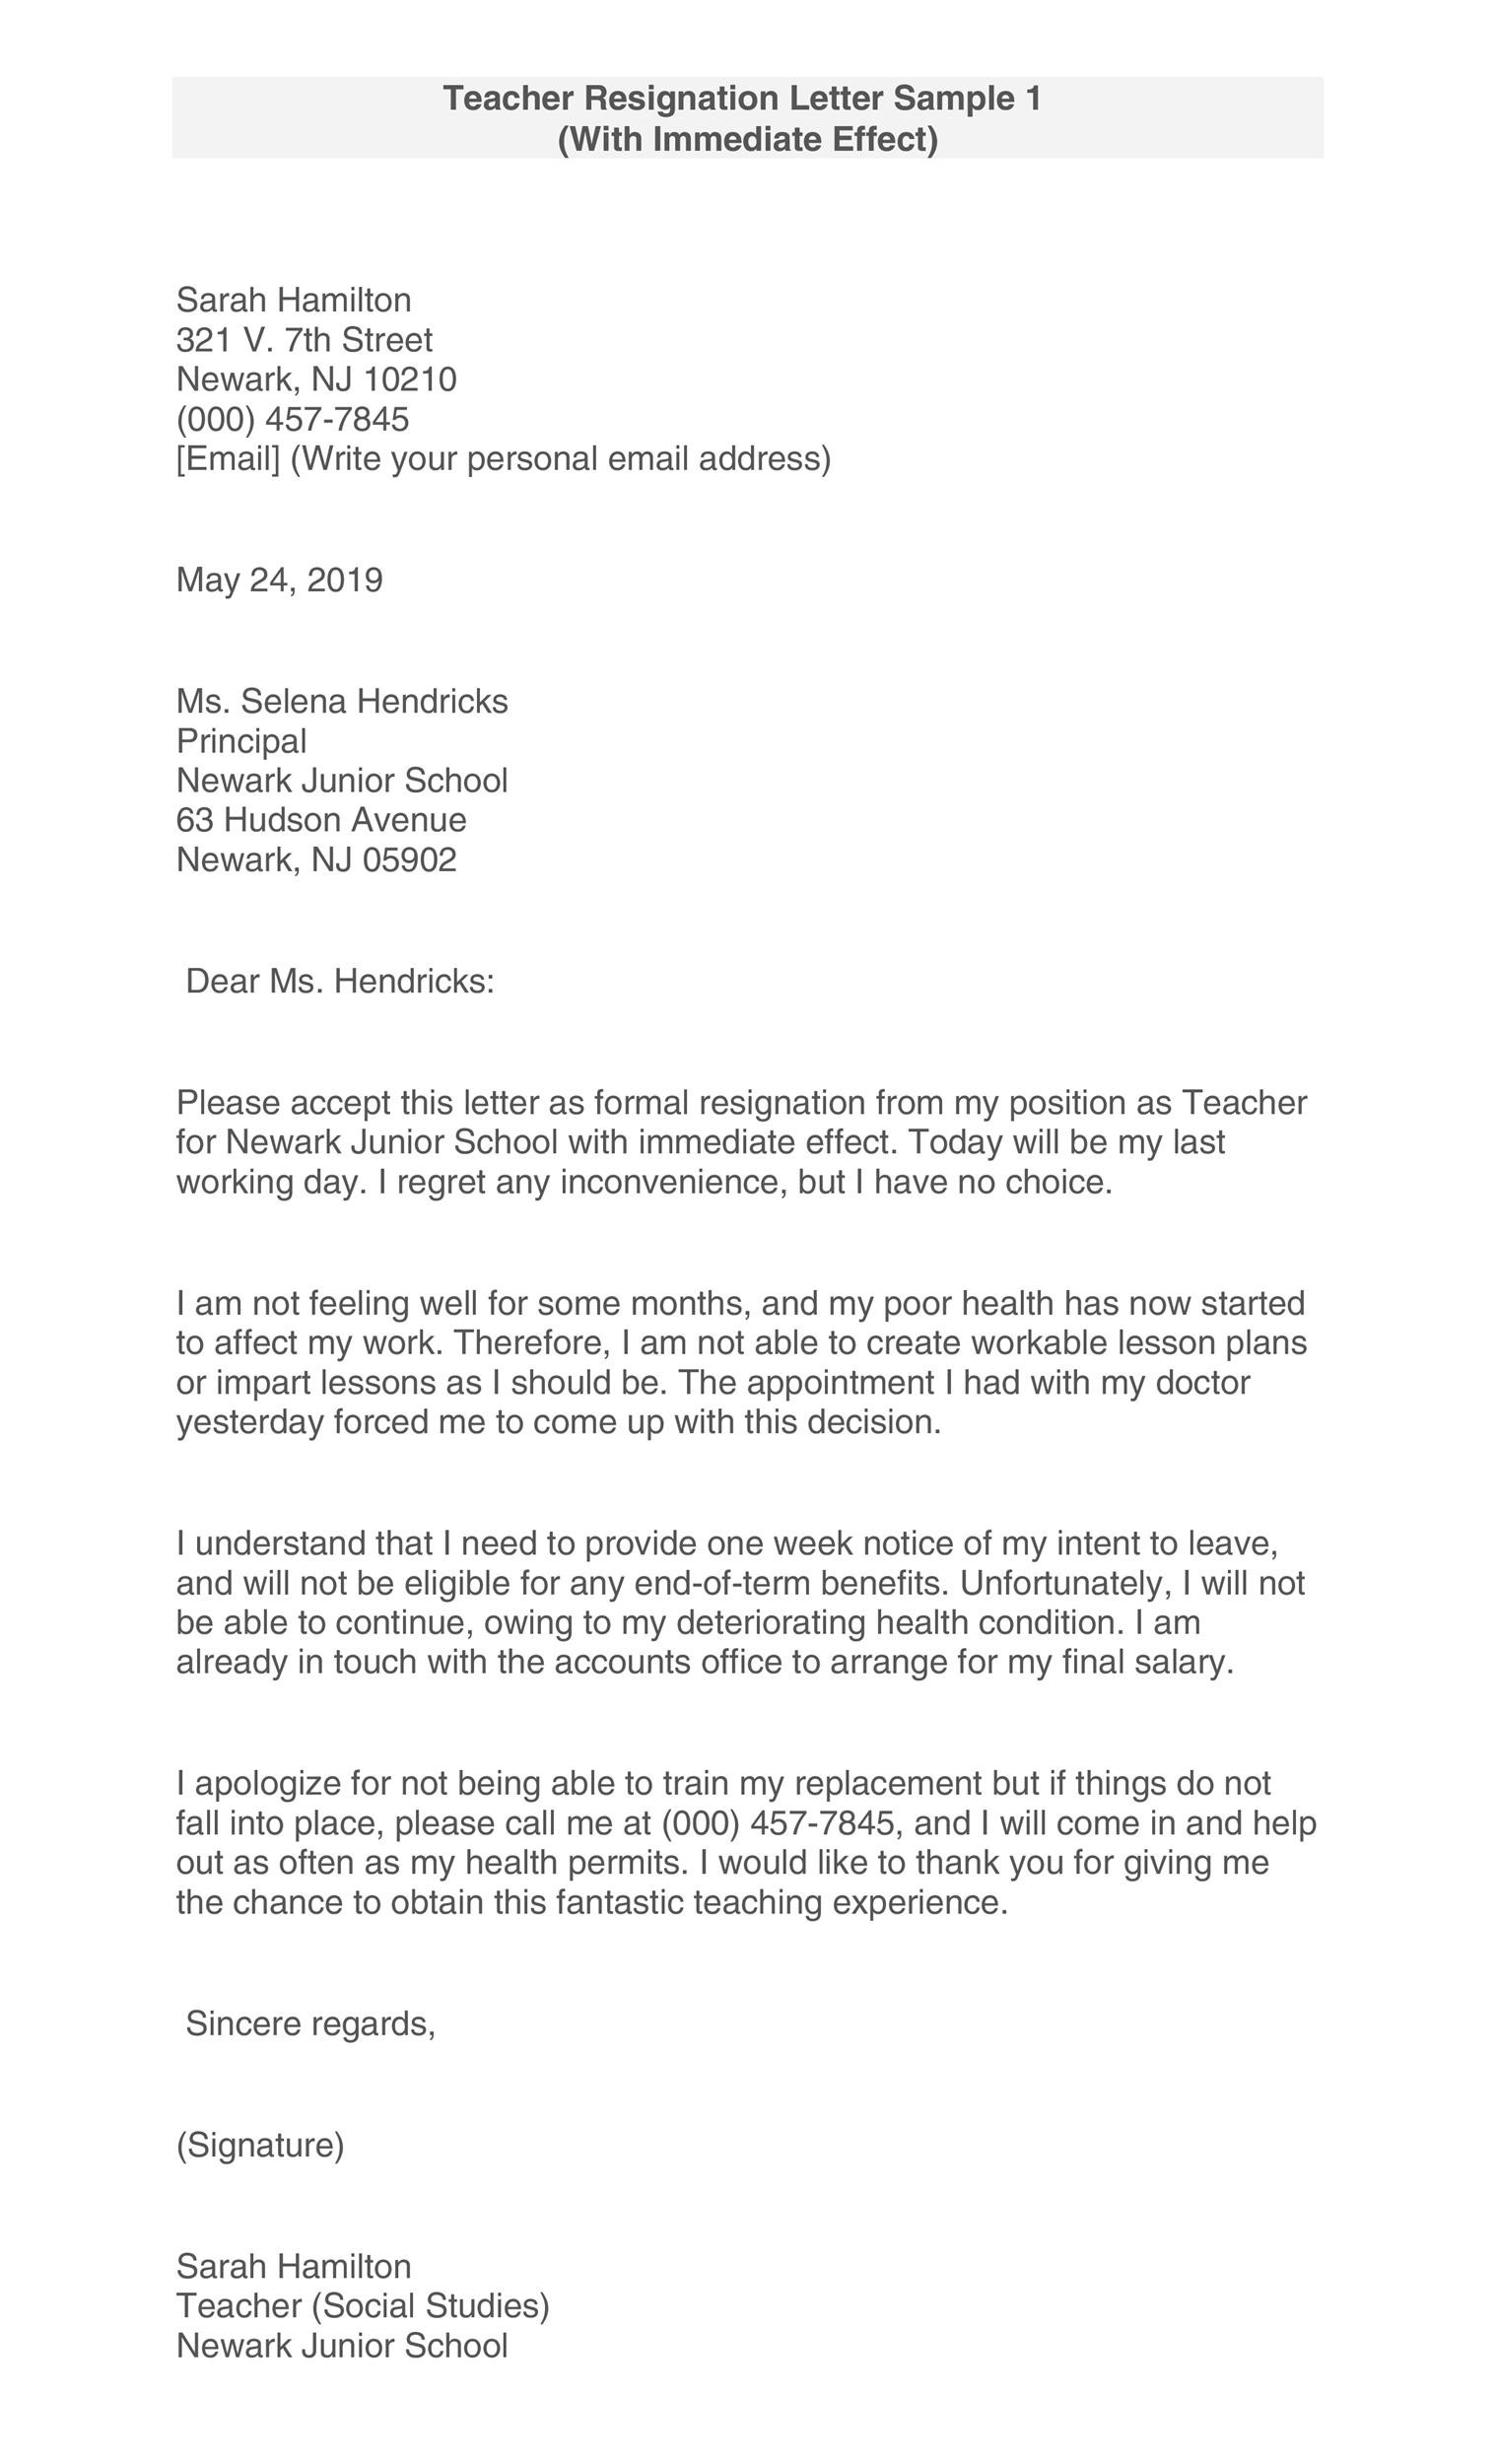 Letter Of Immediate Resignation from templatelab.com